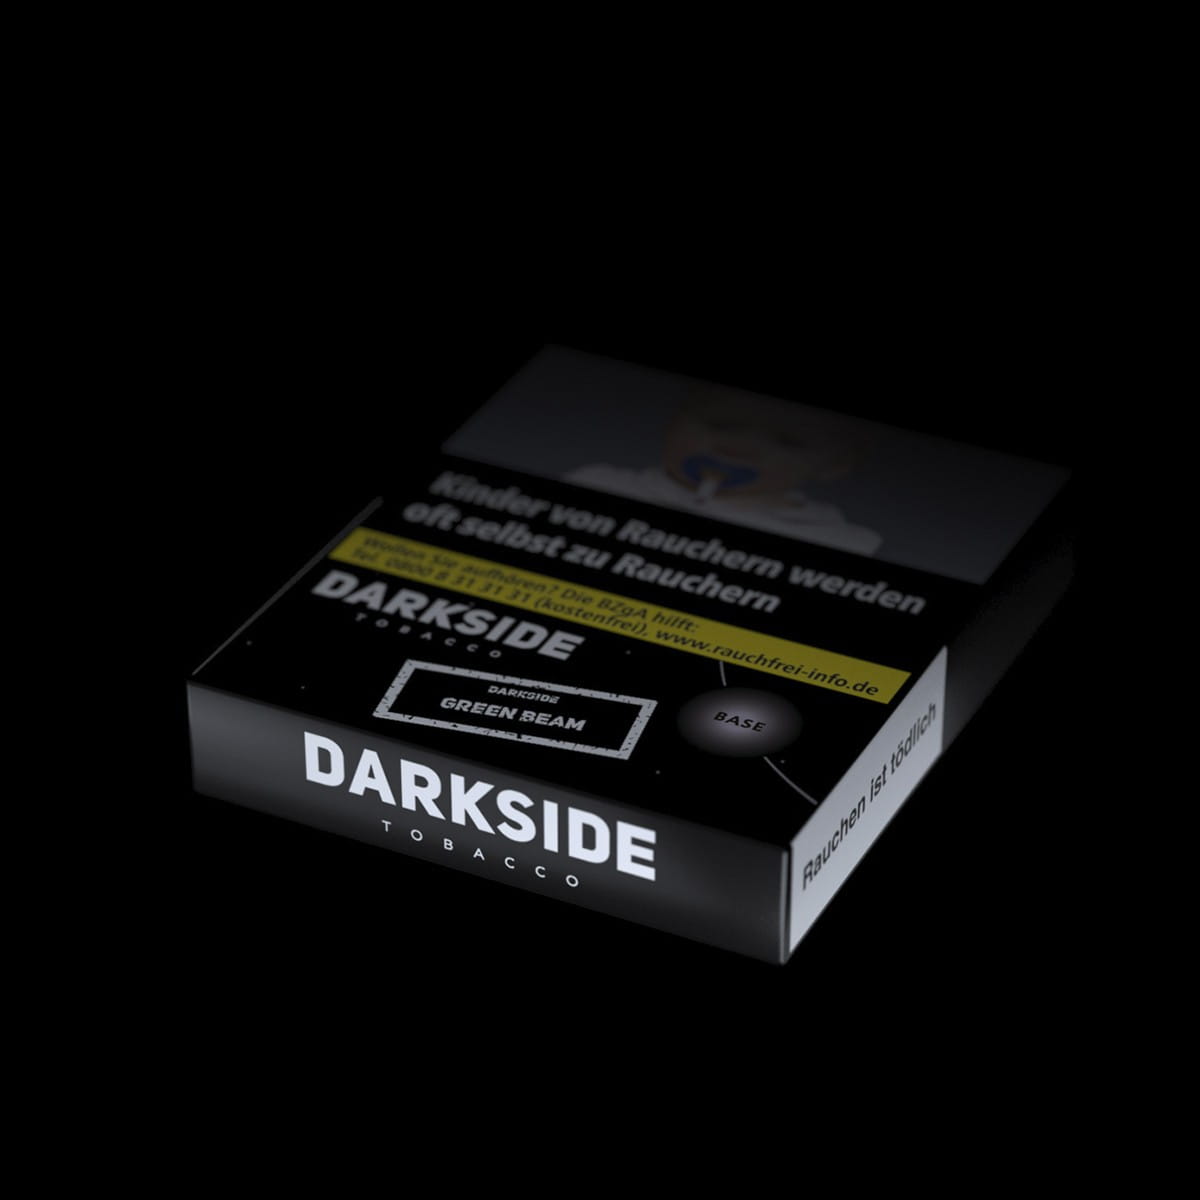 Darkside Base Tabak - Green Beam 200 g unter ohne Angabe